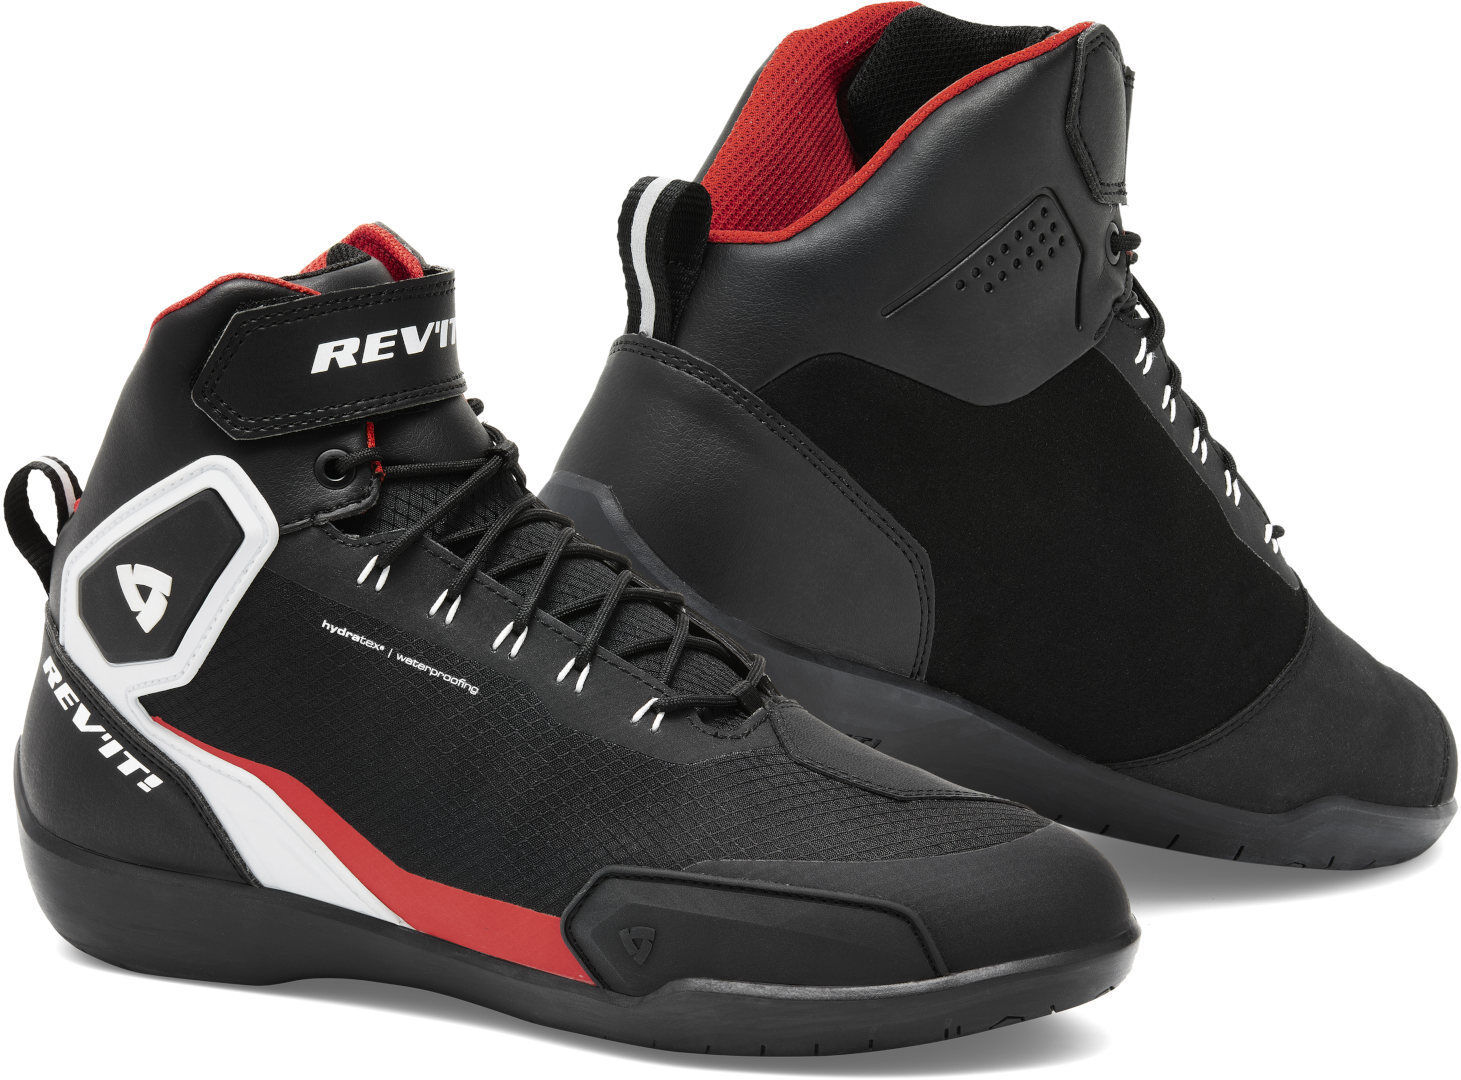 Revit G-Force H2O Zapatos impermeables para motocicletas - Negro Blanco Rojo (40)